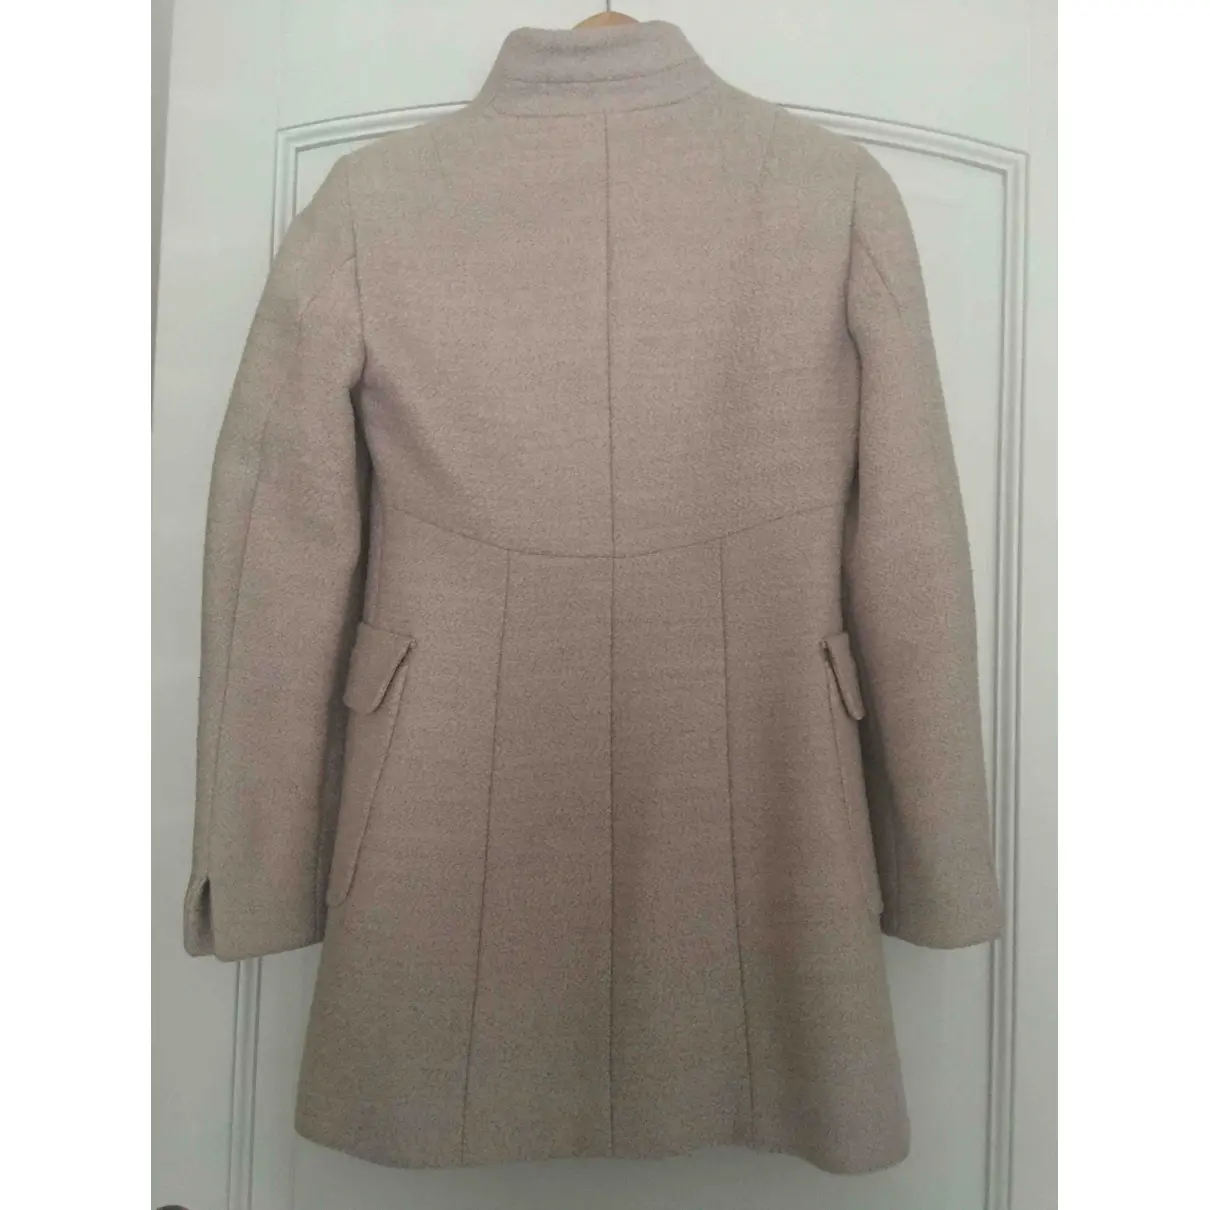 Buy Maska Wool coat online